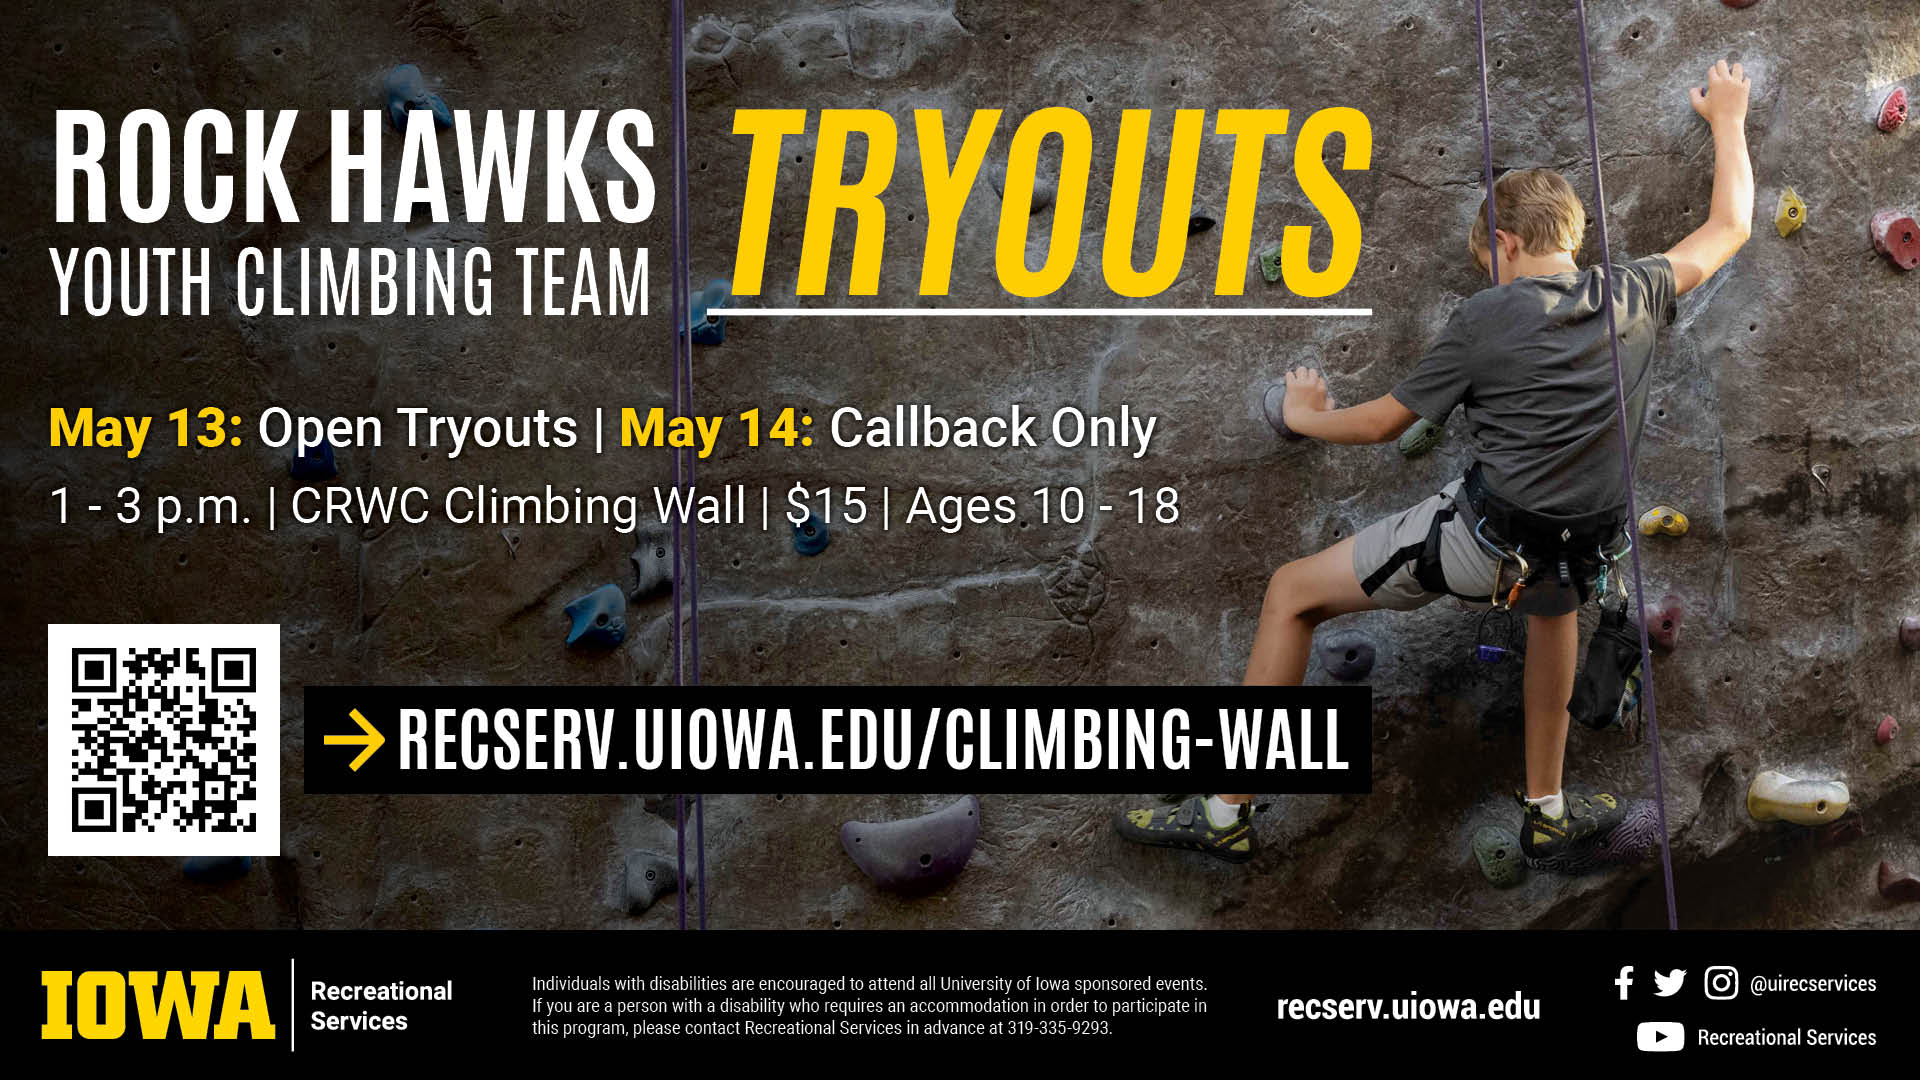 Rock Hawk Youth Climbing Team Tryouts May 13-May 14 recserv.uiowa.edu/climbing-wall